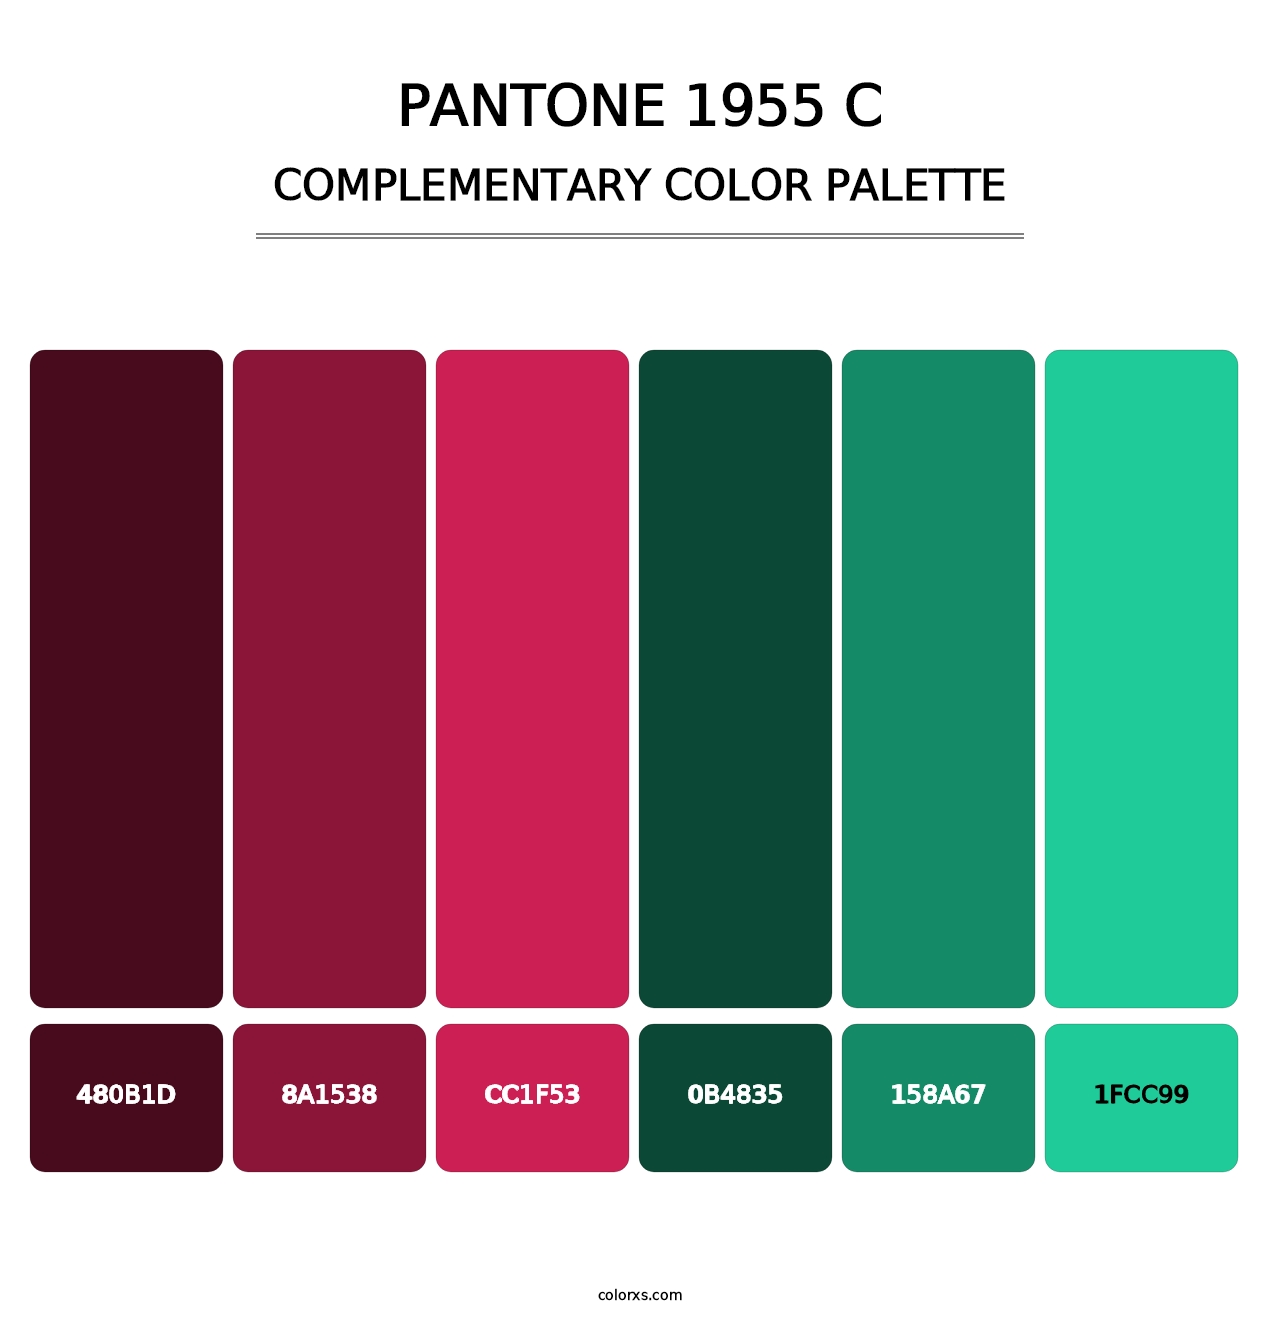 PANTONE 1955 C - Complementary Color Palette